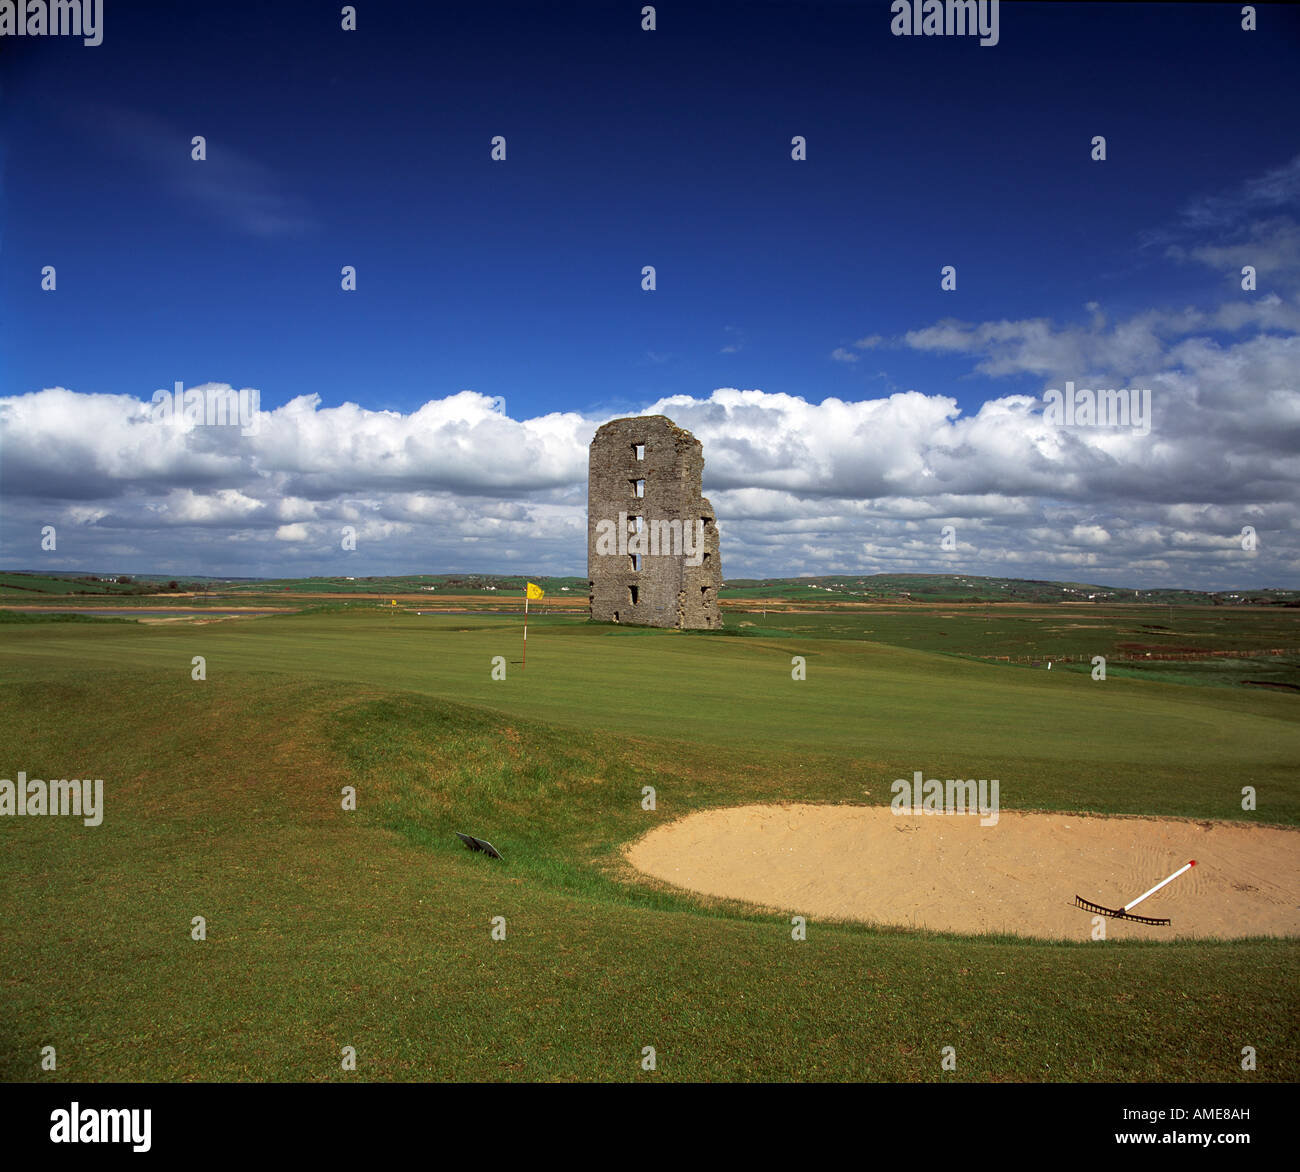 18-Loch-Golfplatz am Atlantik Westküste Irlands Stockfoto